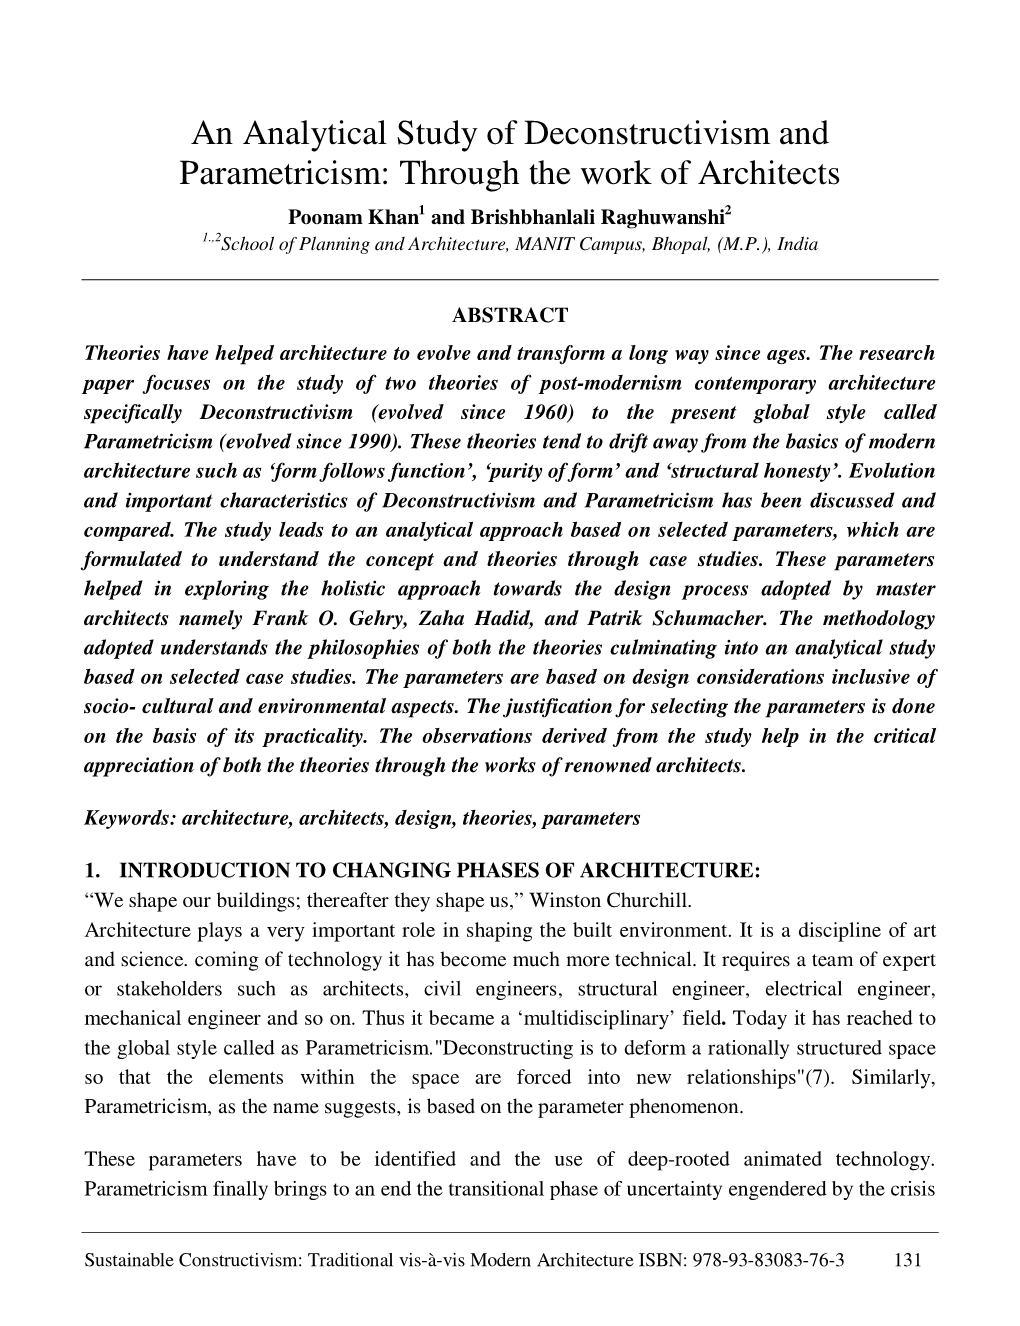 An Analytical Study of Deconstructivism and Parametricism